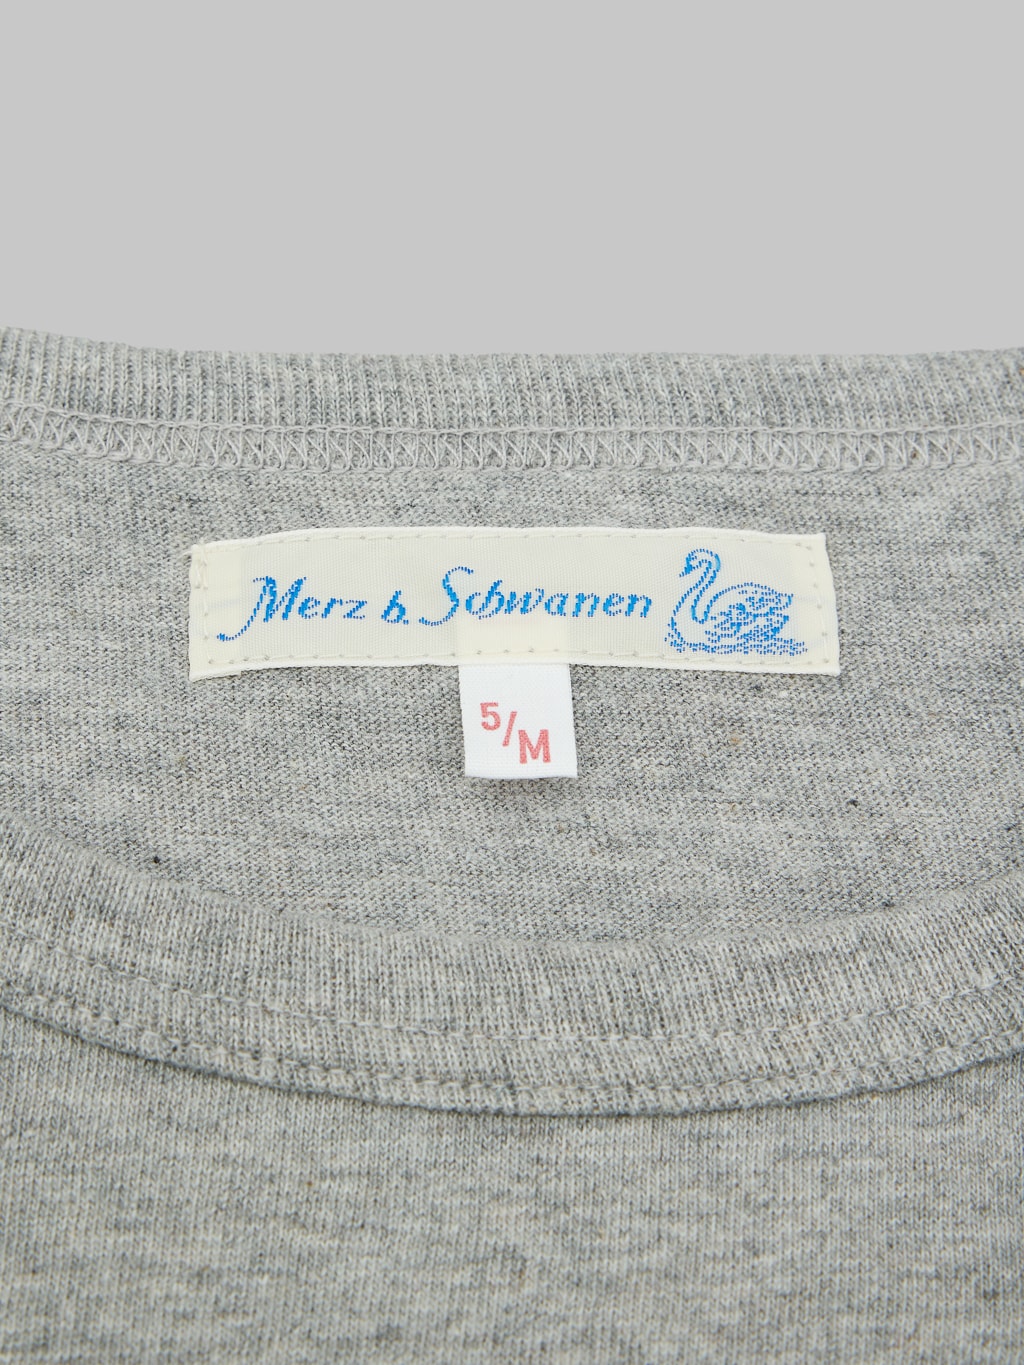 Merz b Schwanen 1950s Loopwheeled Classic Fit TShirt grey size label